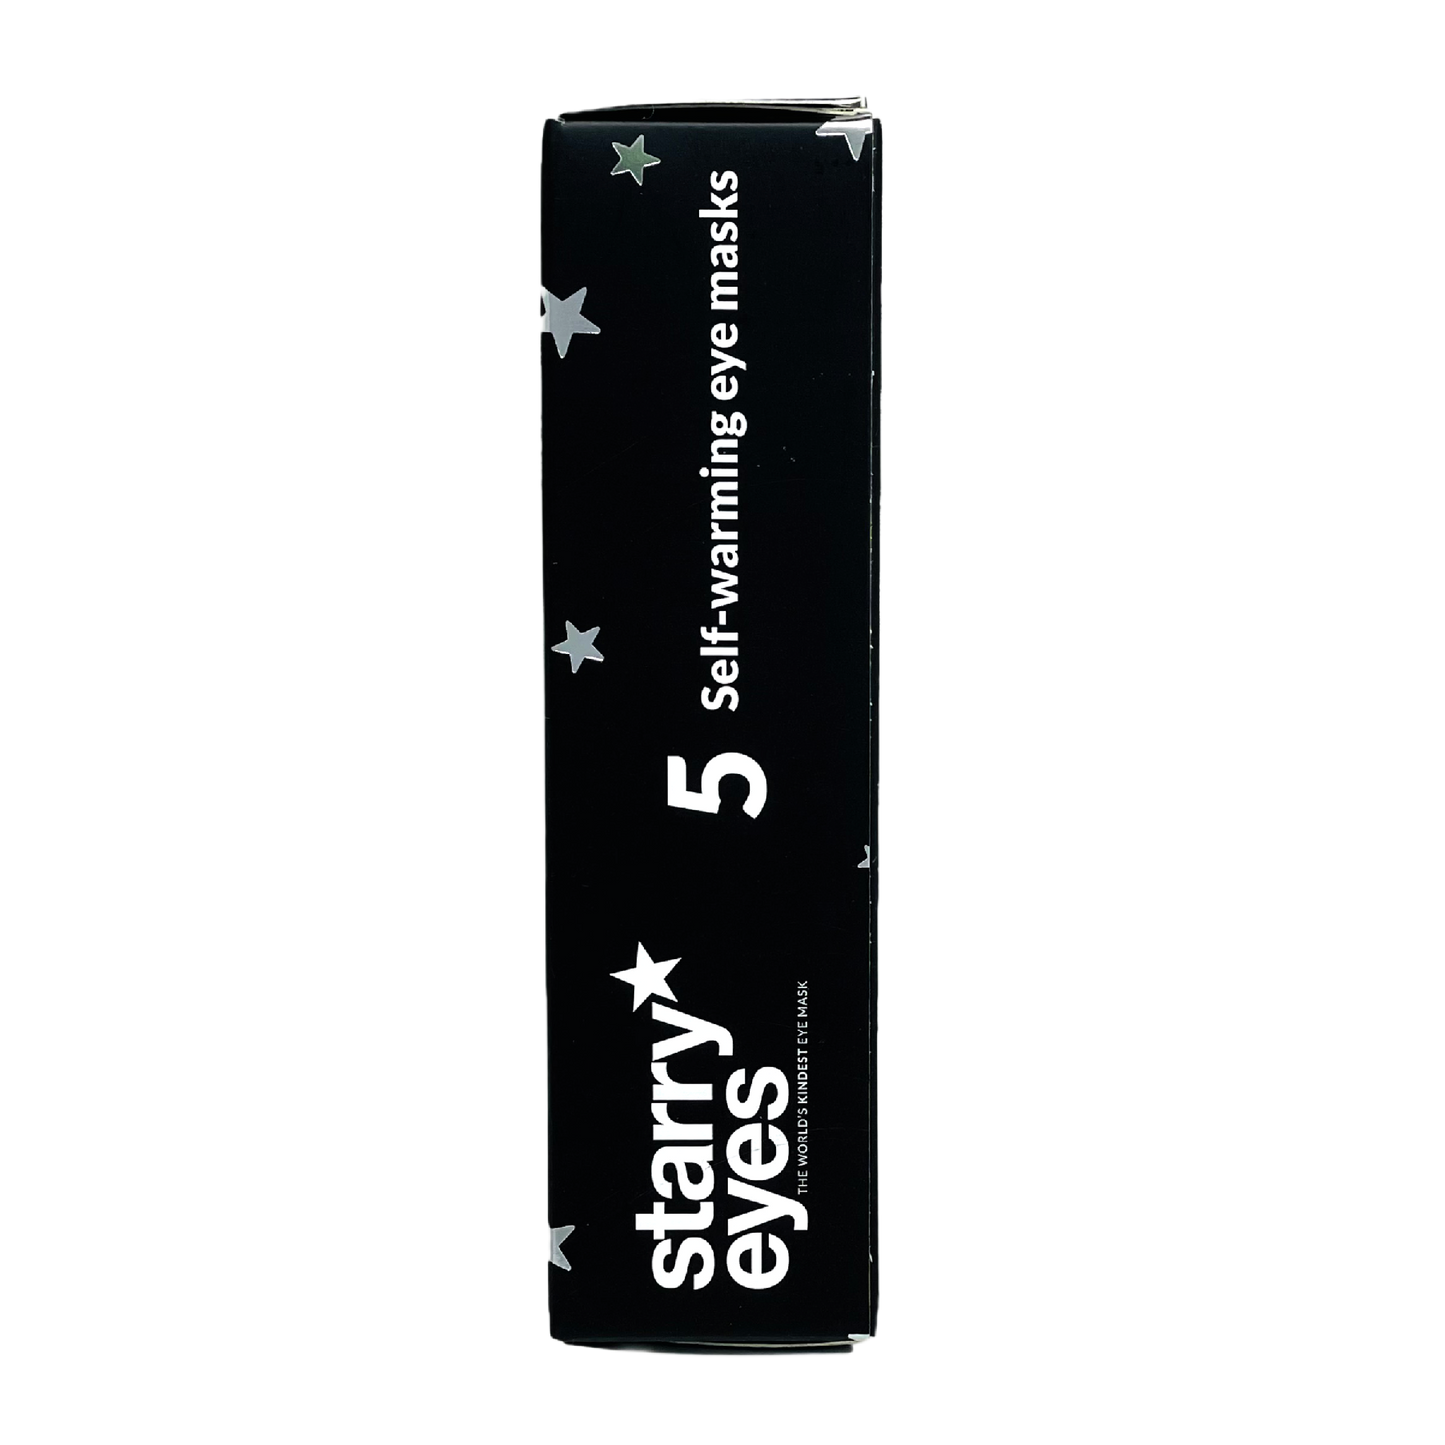 Starry Eyes Fragrance-free Self-warming Sleep Masks (5 Pack)